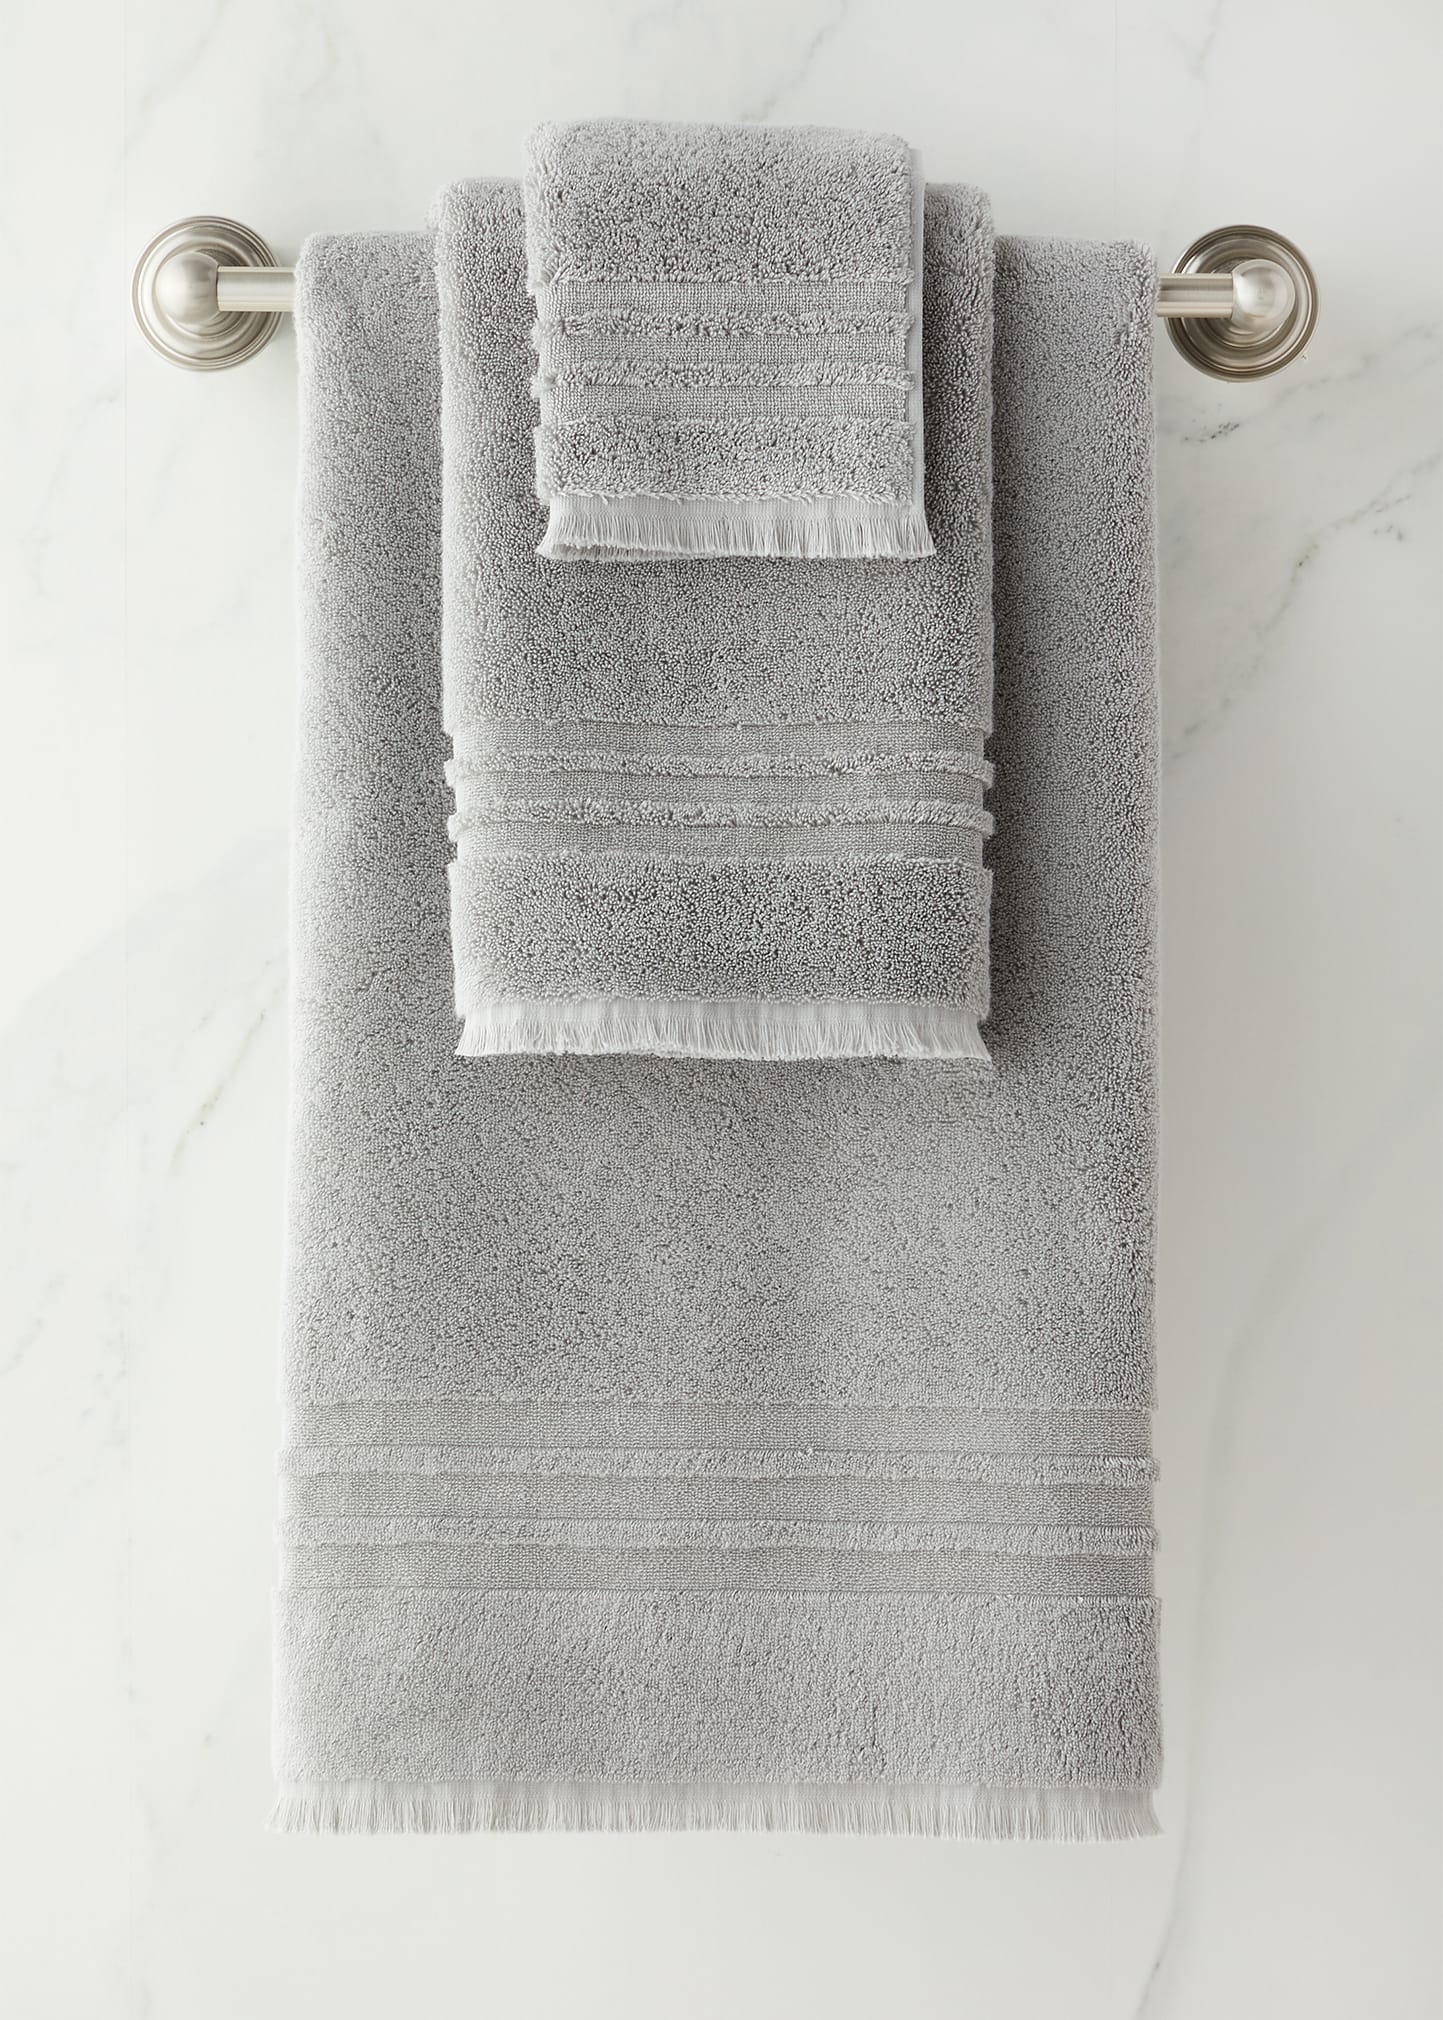 Kassatex Mercer Hand Towel